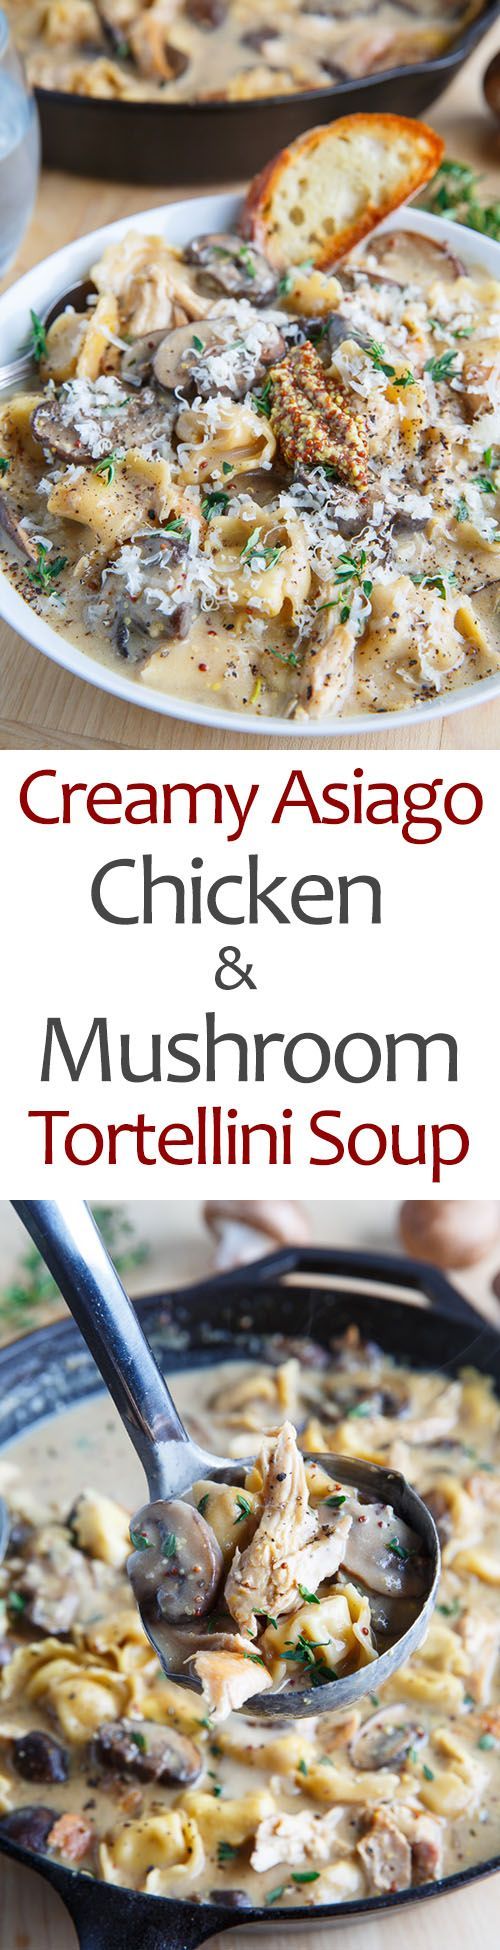 Creamy Asiago Chicken & Mushroom Tortellini Soup